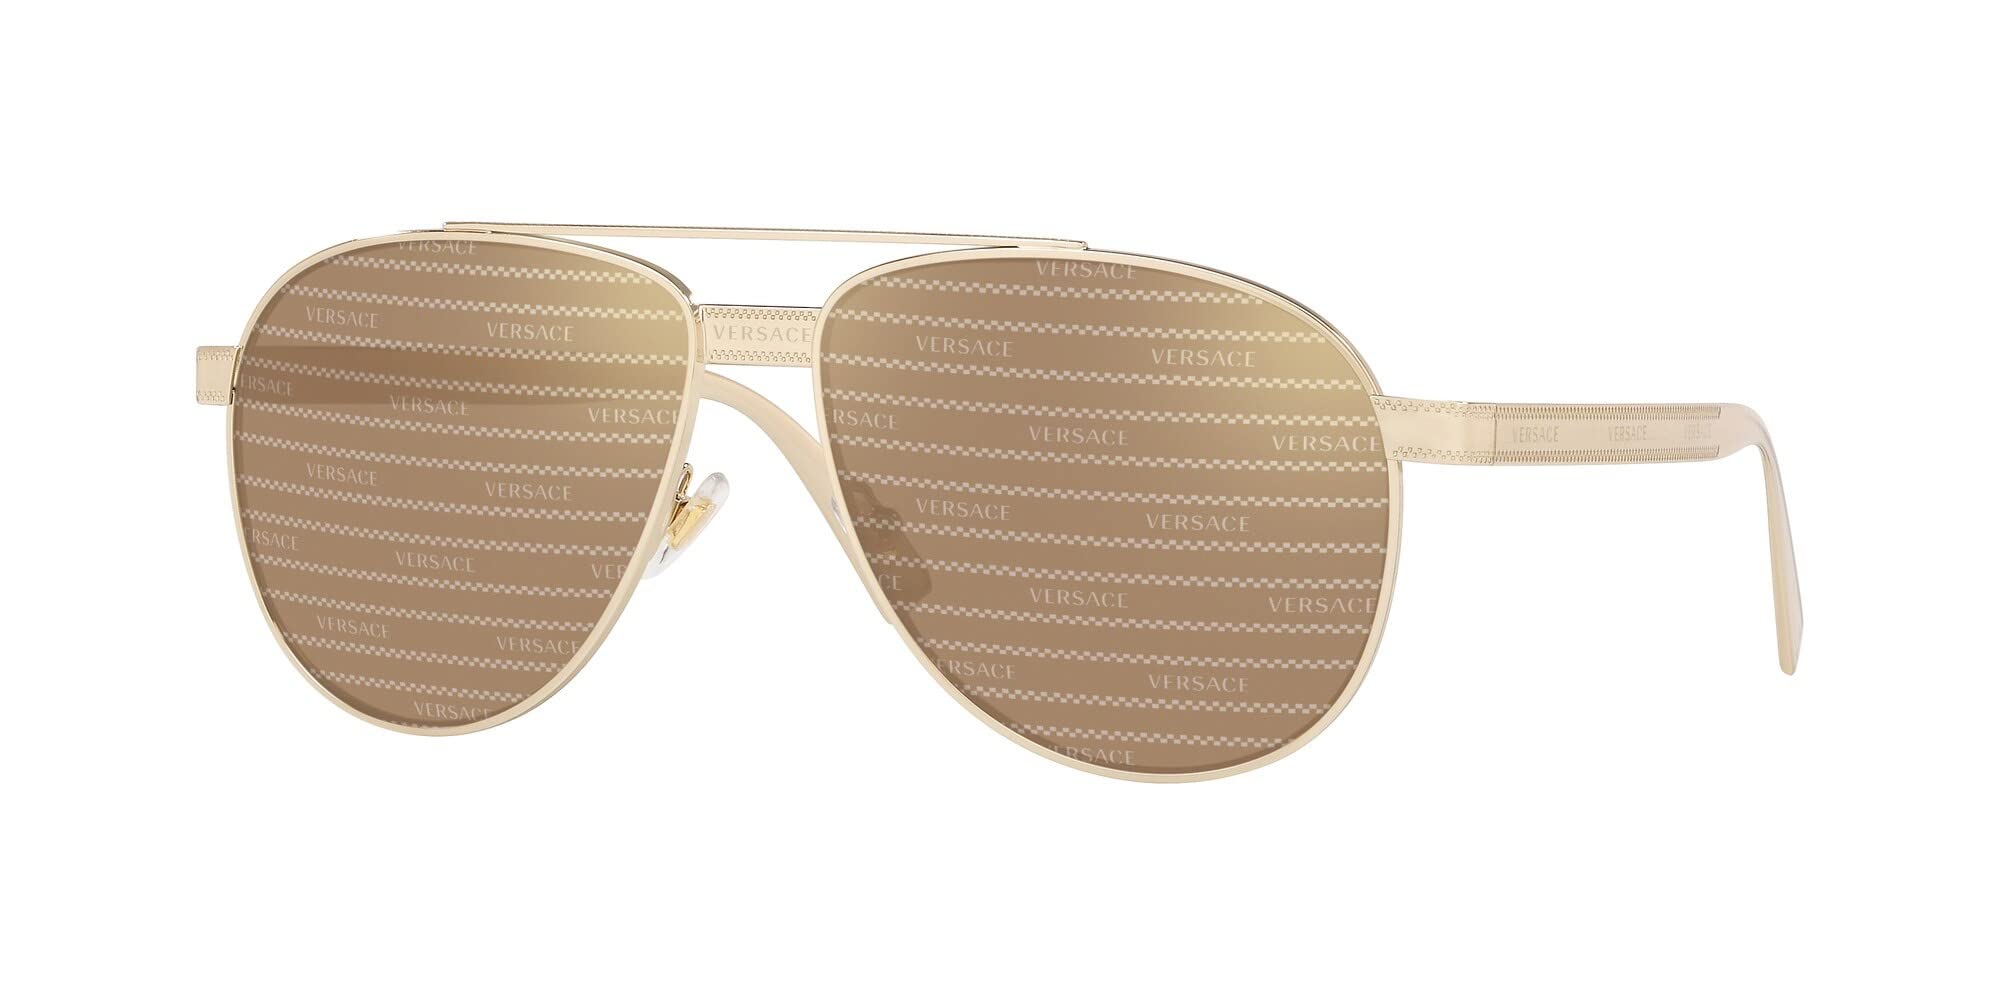 Versace Brown Tampo Versace Silver Gold Pilot Men's Sunglasses VE2209 1252V3 58